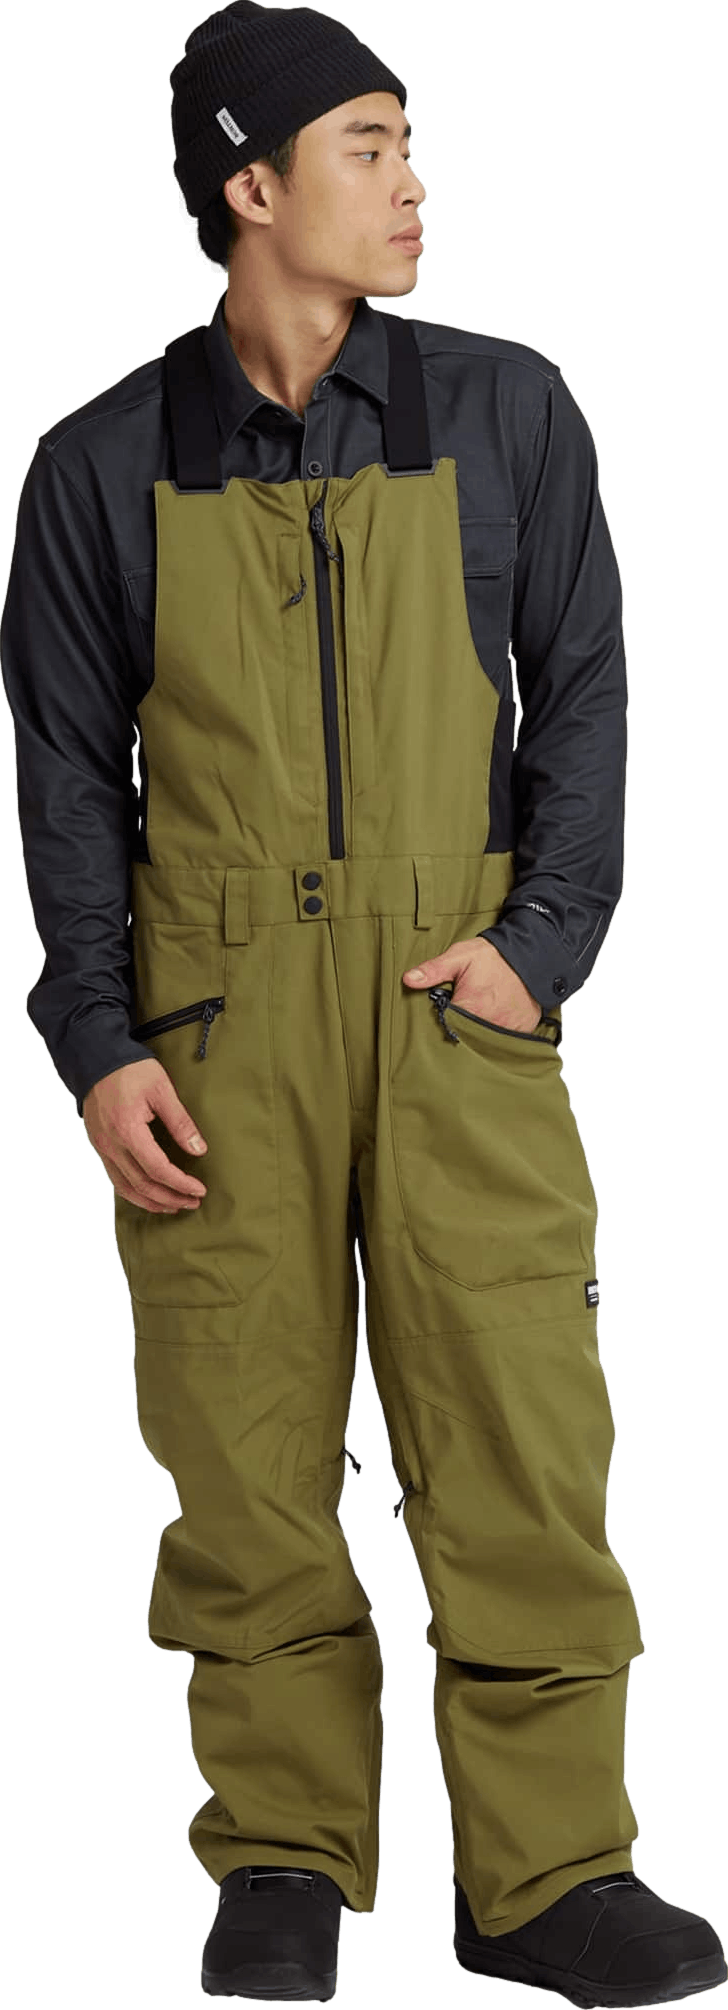 Burton Snow Board Ski Pants  Boys XL  clothing  accessories  by